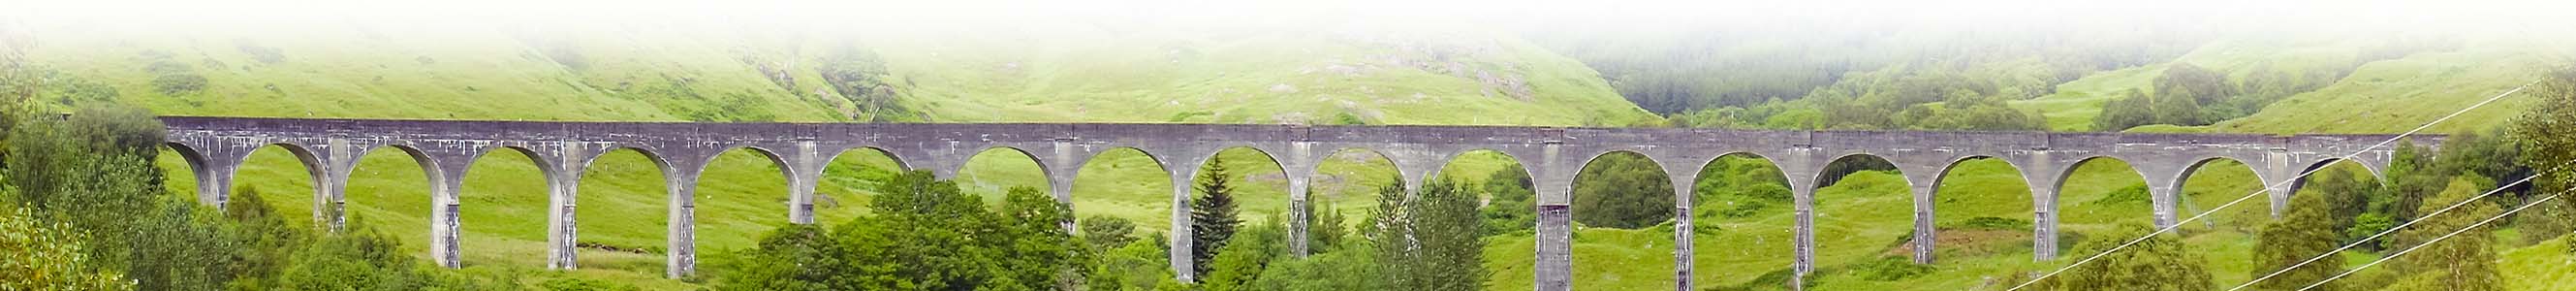 Glenfinnan Railway Viaduct